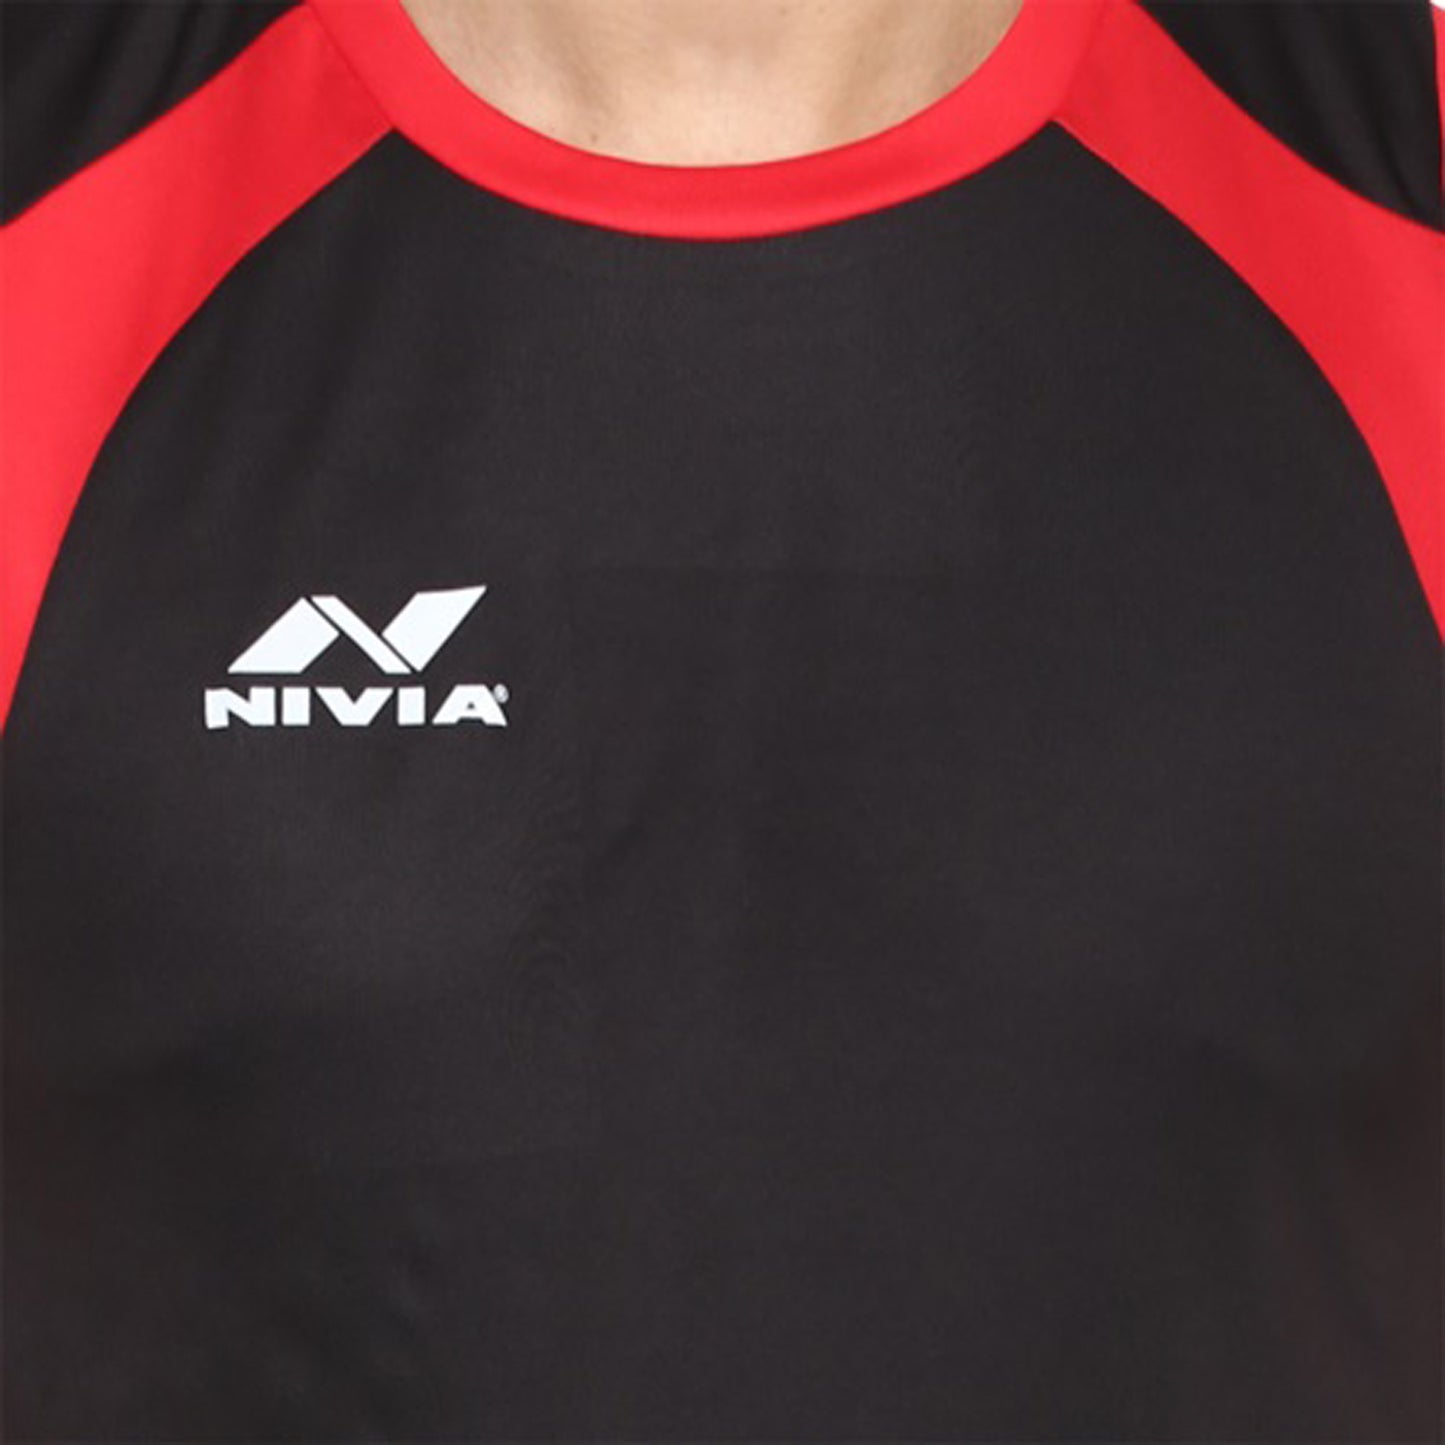 Nivia 2103 Phantom Jersey Set for Men, Black/Red - Best Price online Prokicksports.com